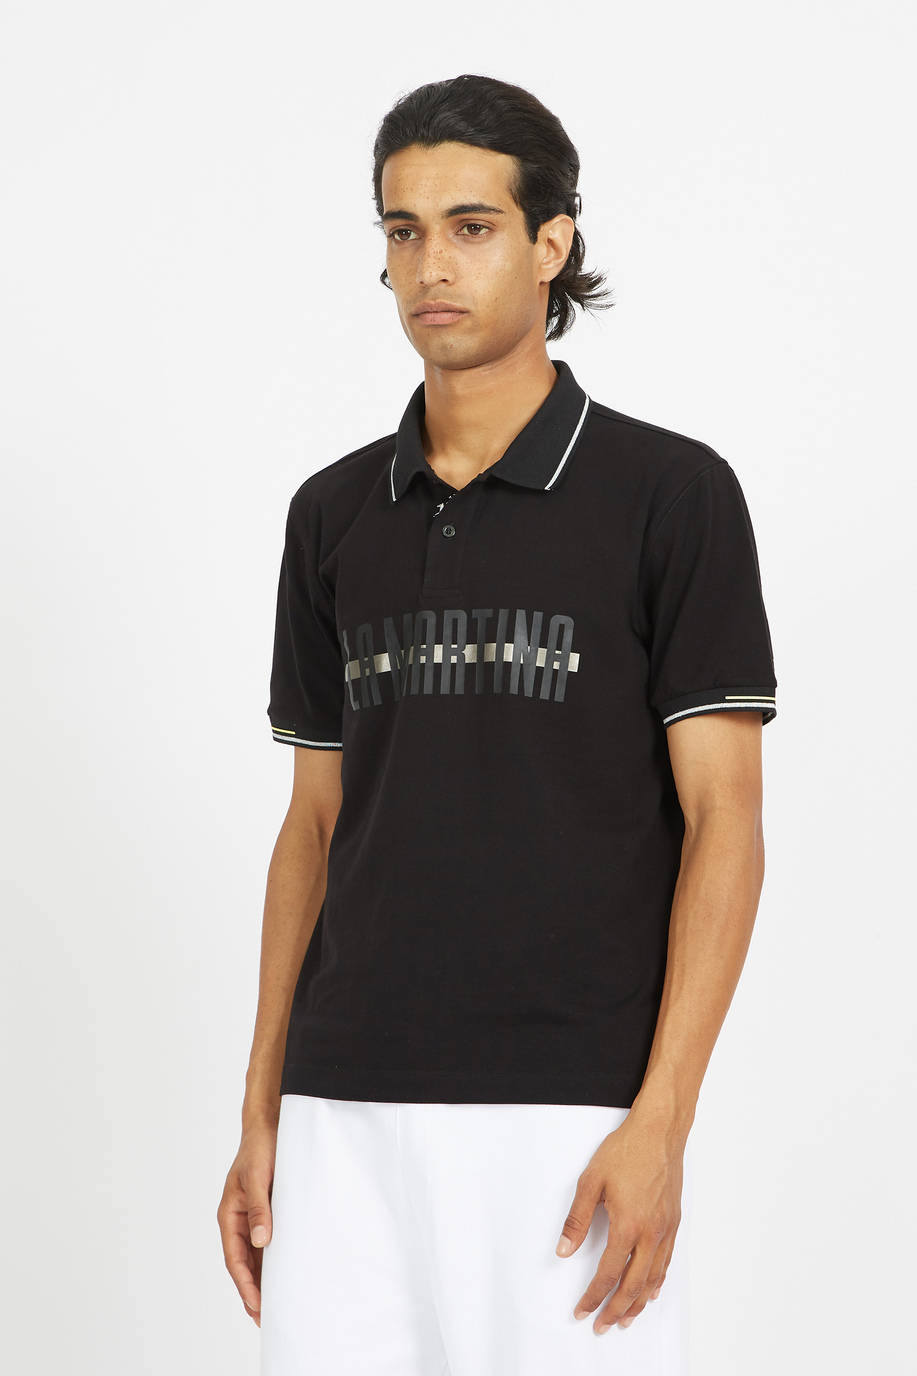 Herren-Kurzarm-Poloshirt aus Stretch-Baumwolle mit normaler Passform - Vitus - Poloshirts | La Martina - Official Online Shop